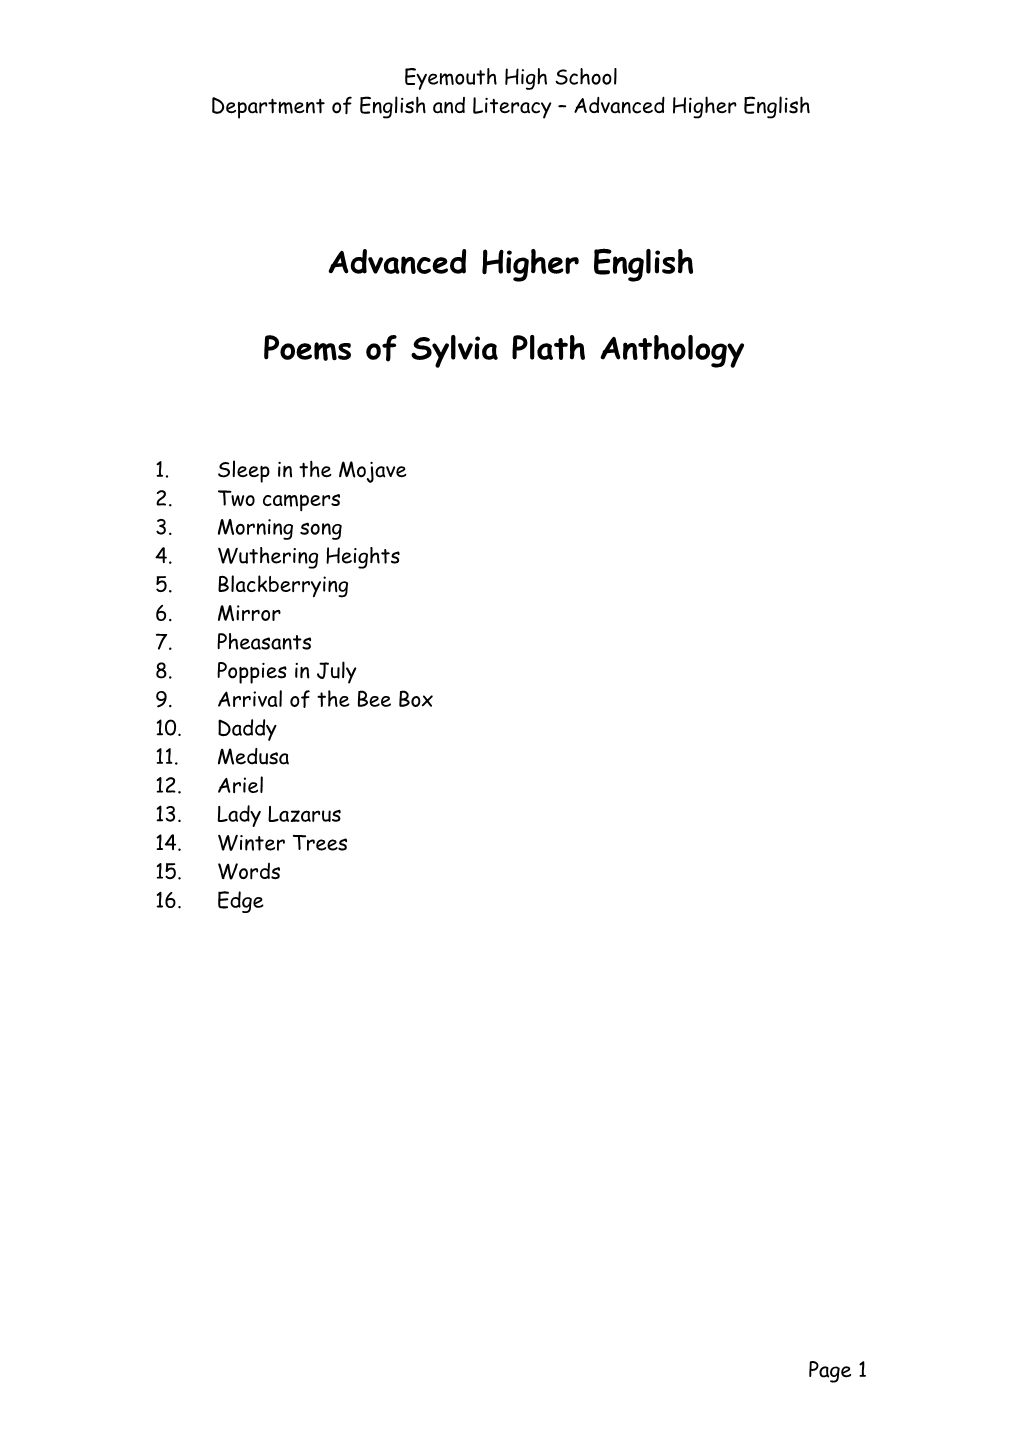 Advanced Higher English